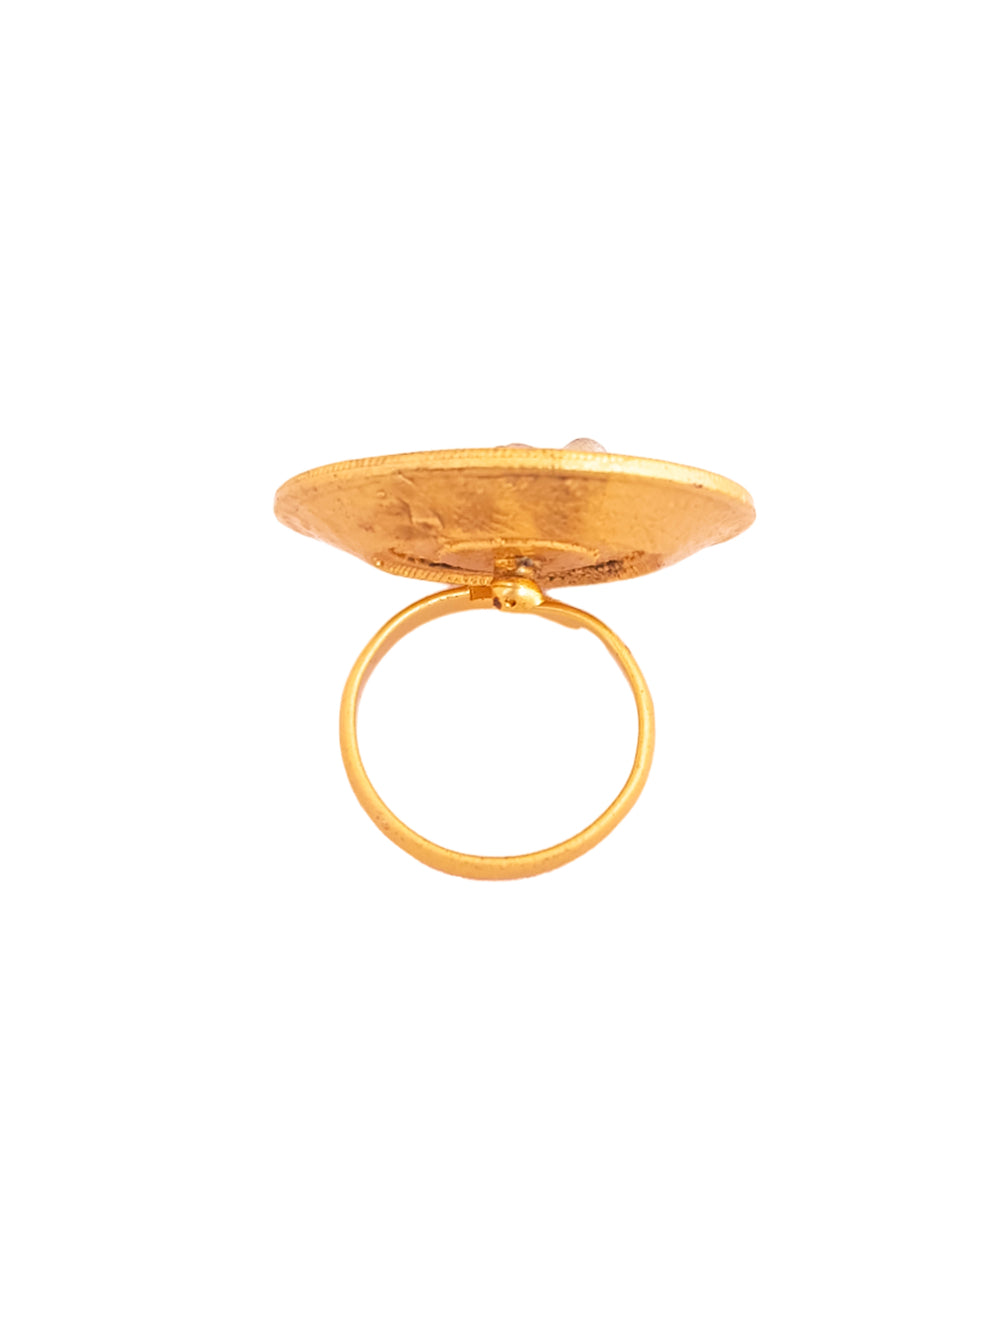 Antique Gold Plated Adjustable Size Designer Finger ring with Stones 10162N